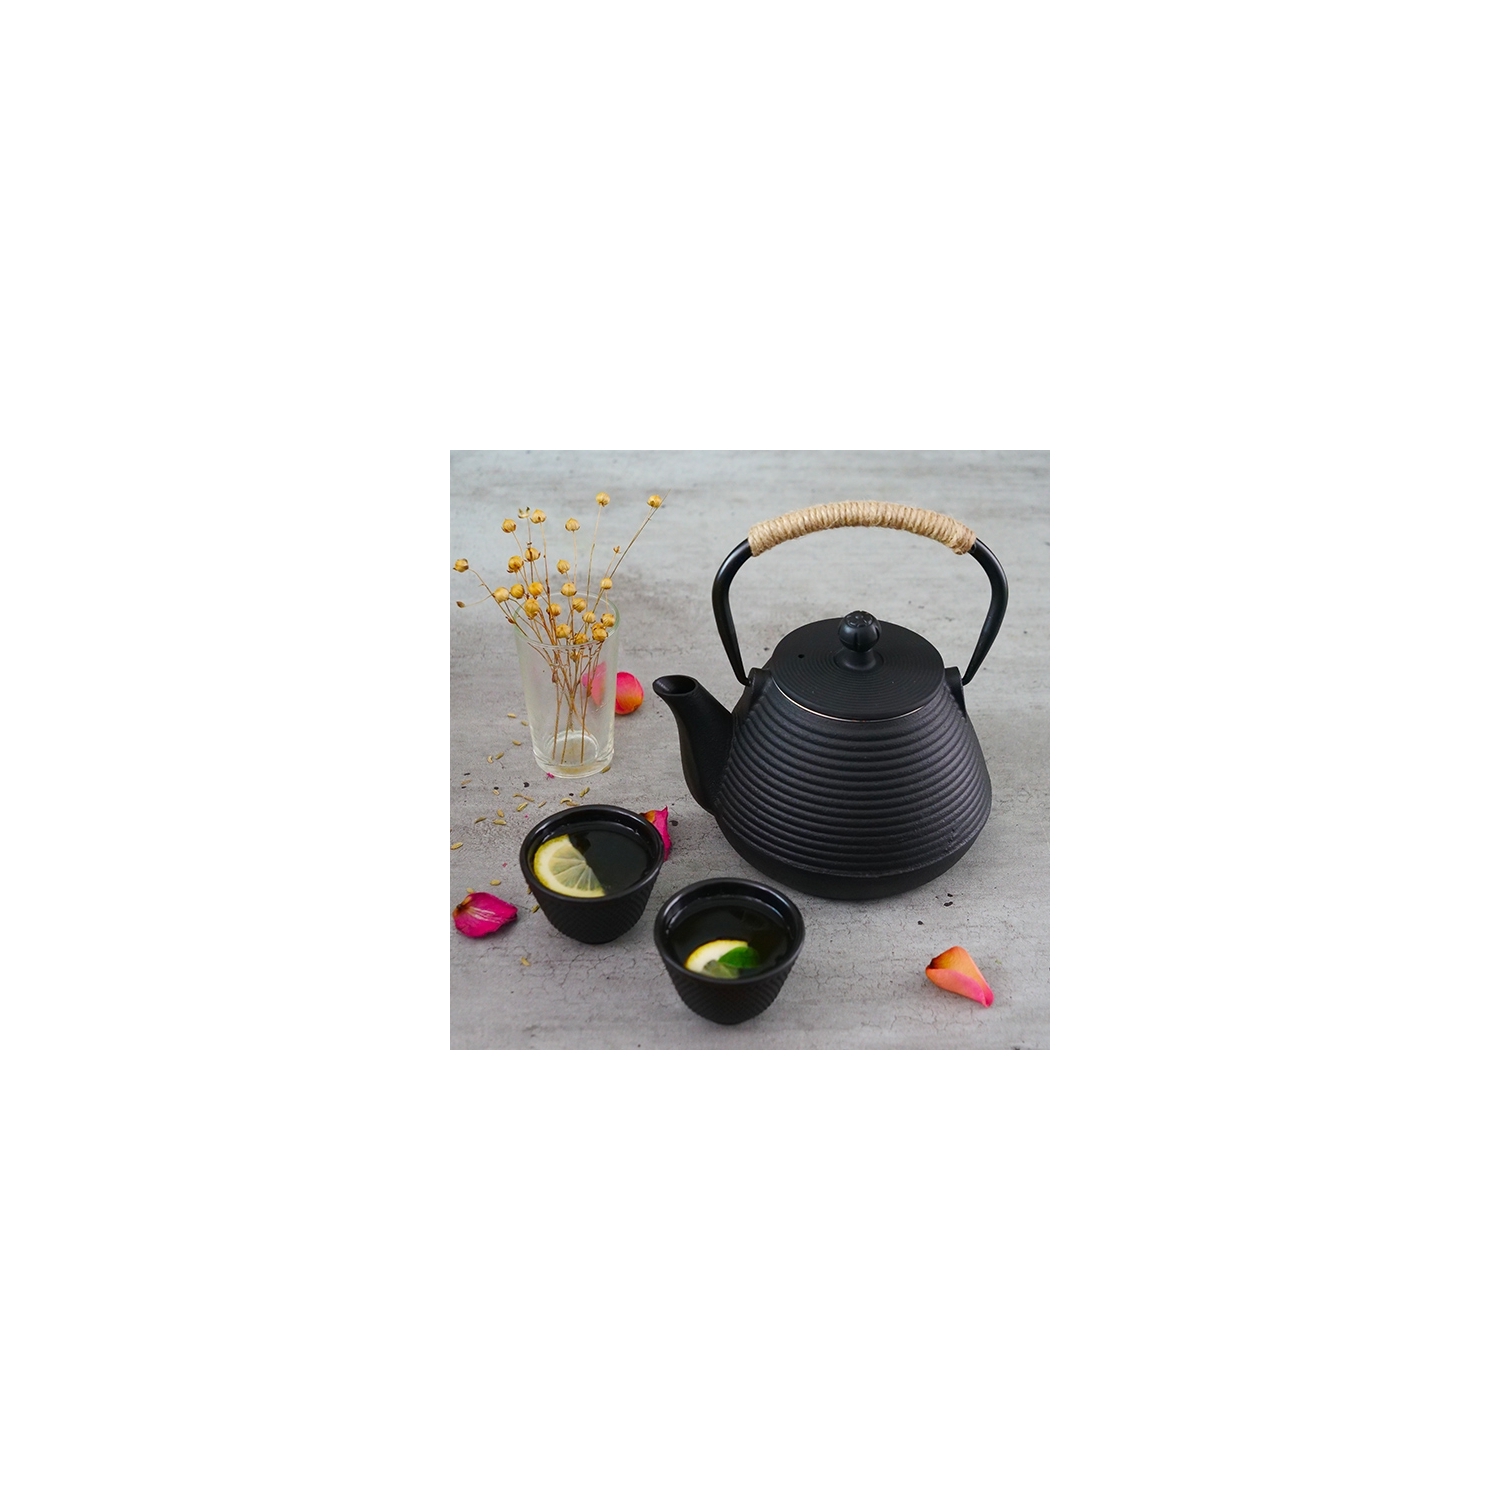 Tetsubin teapot Cast iron black 1000ml